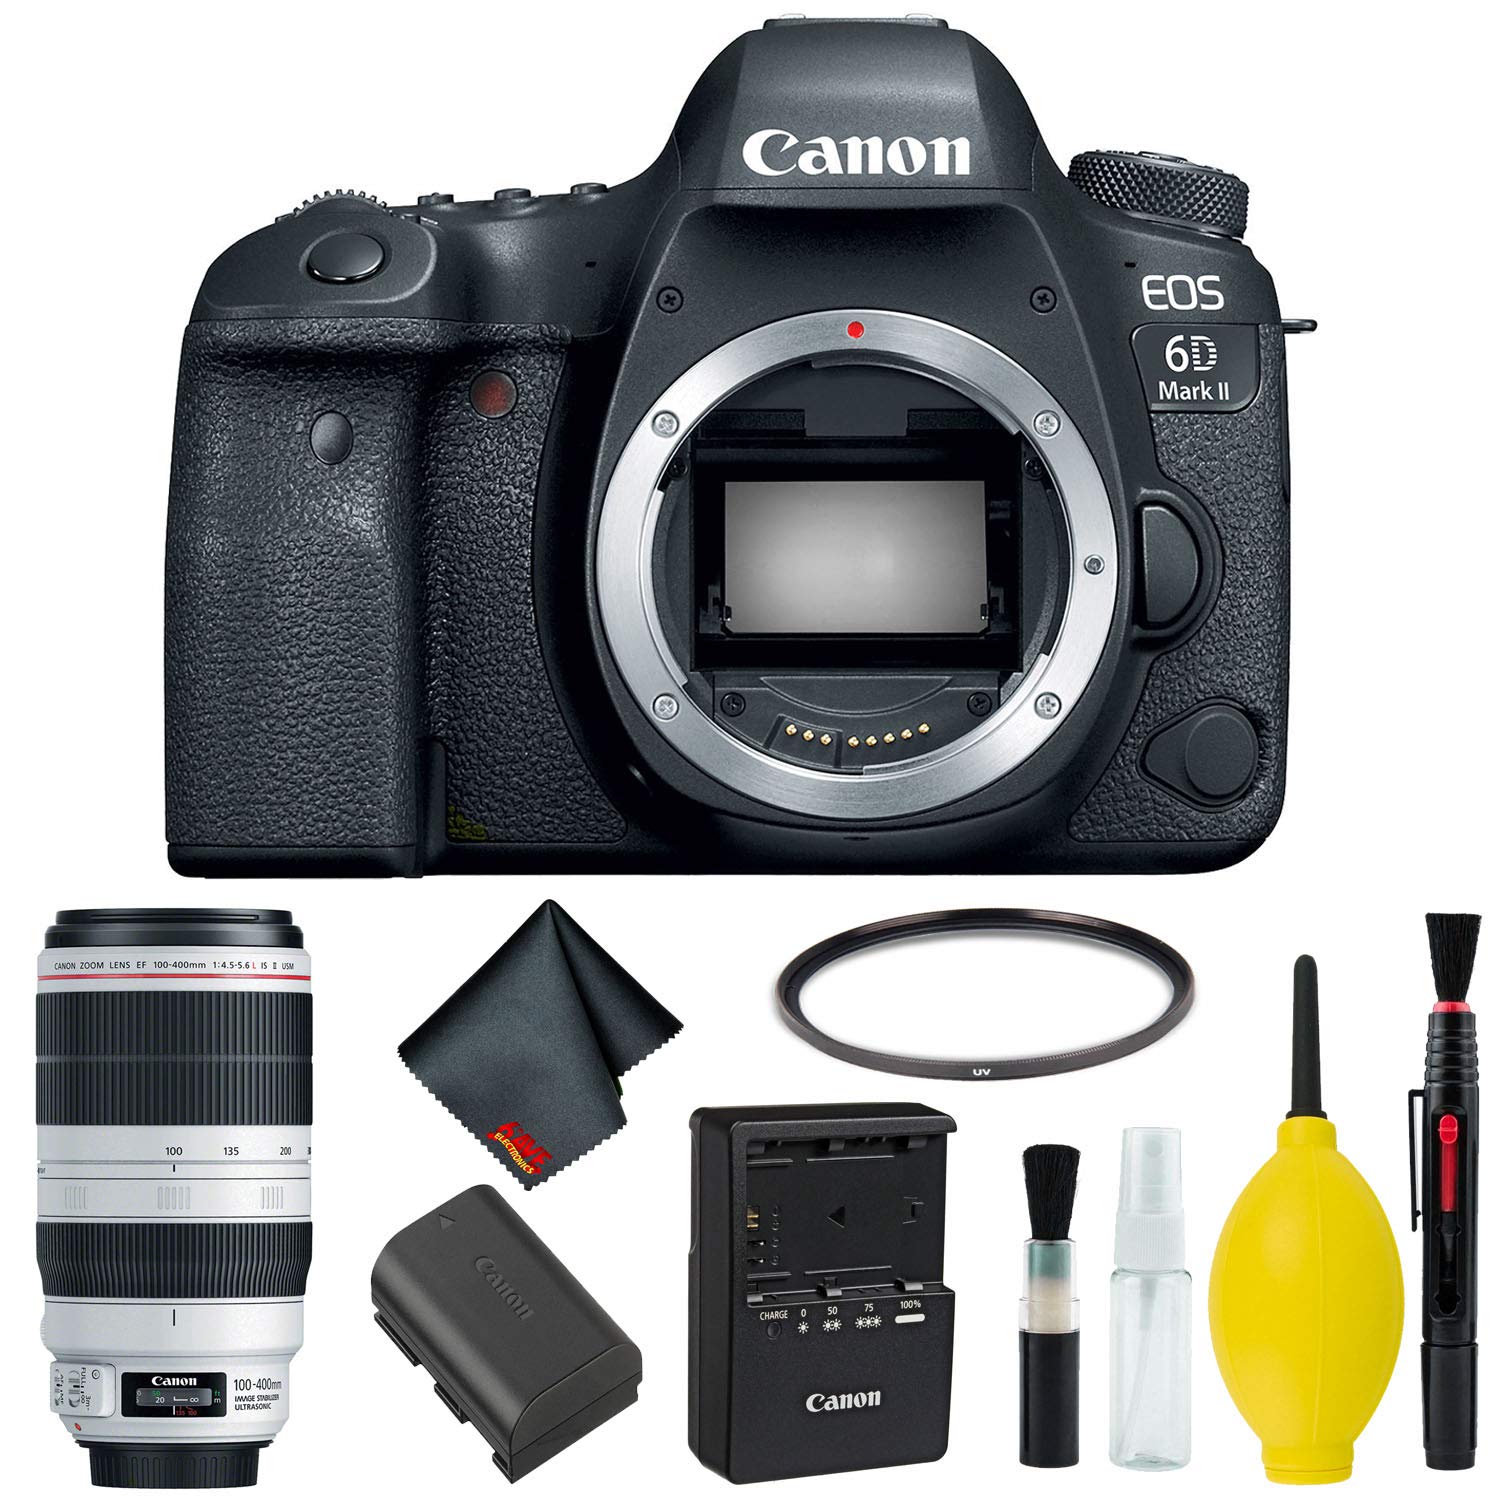 Canon EOS 6D Mark II DSLR Camera Body Only Basic Kit (International Model) w/Canon EF 100-400mm f/4.5-5.6L is II USM Len